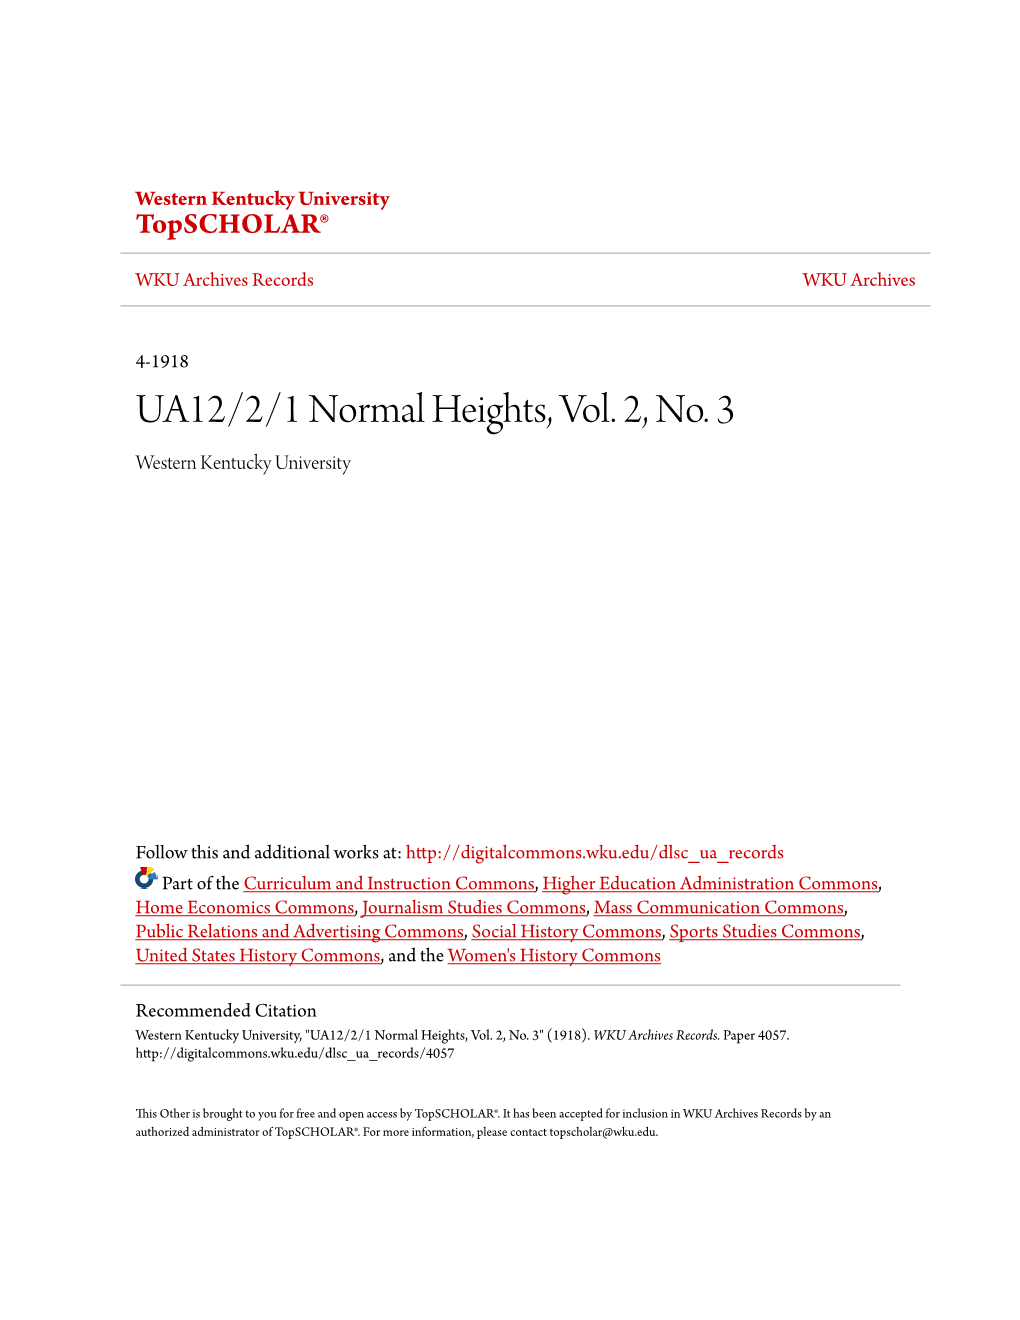 UA12/2/1 Normal Heights, Vol. 2, No. 3 Western Kentucky University